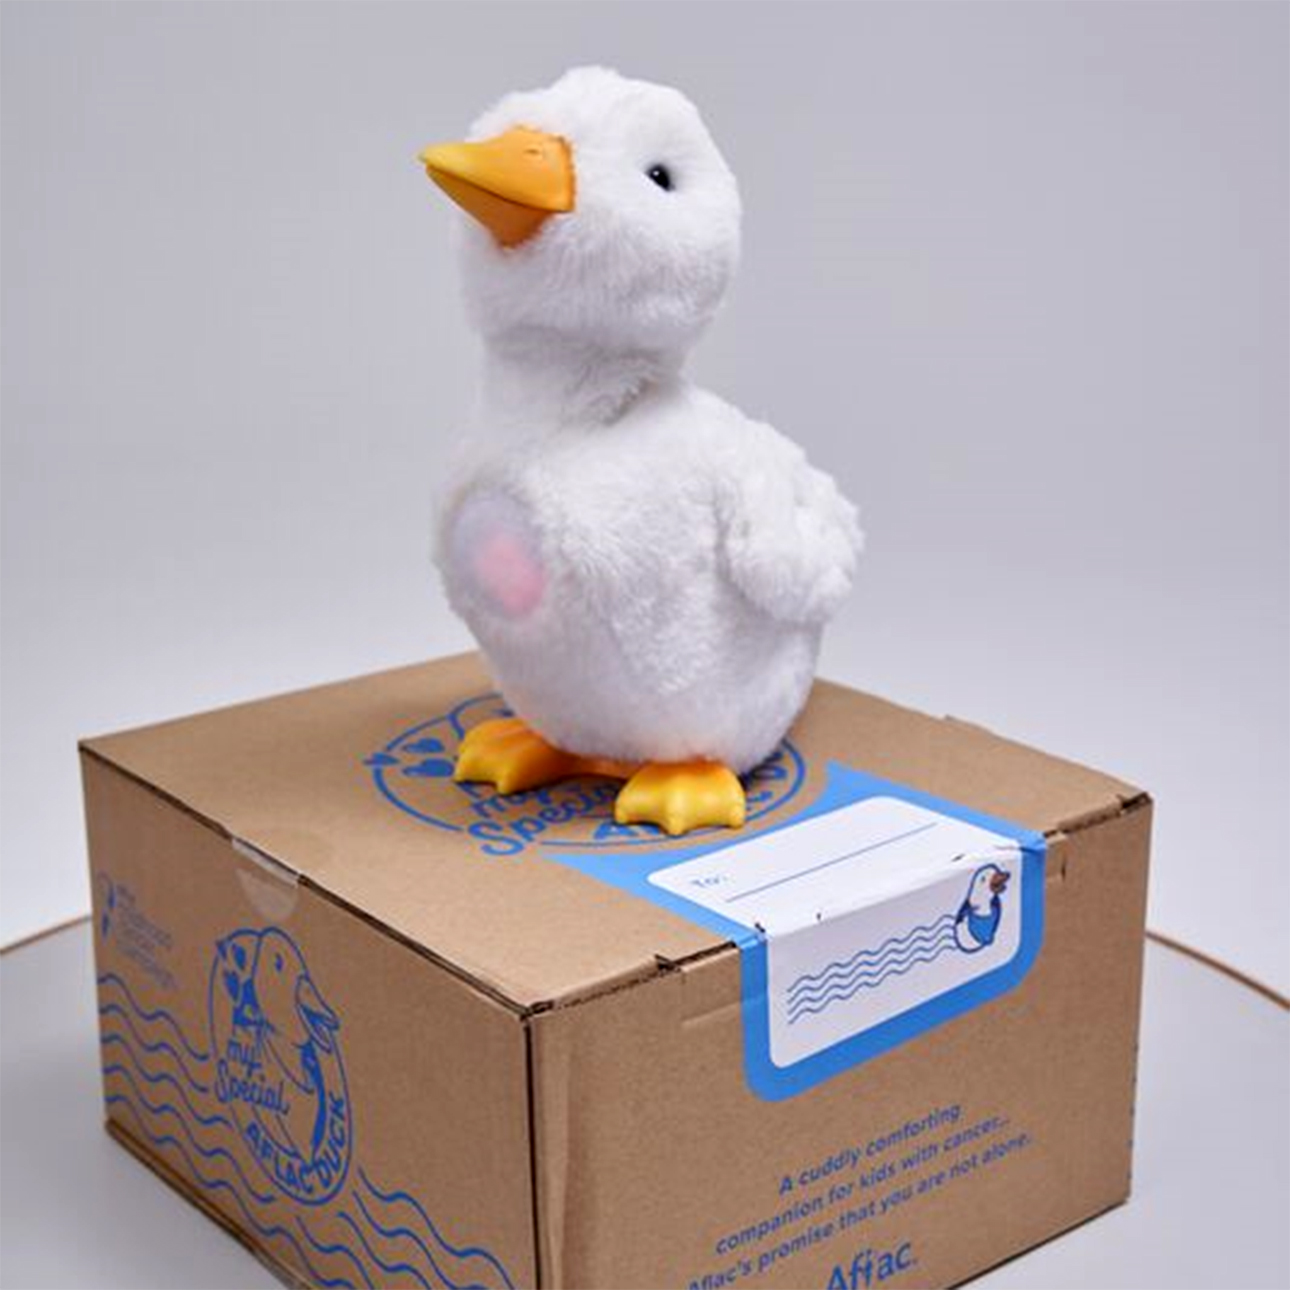 duck on box